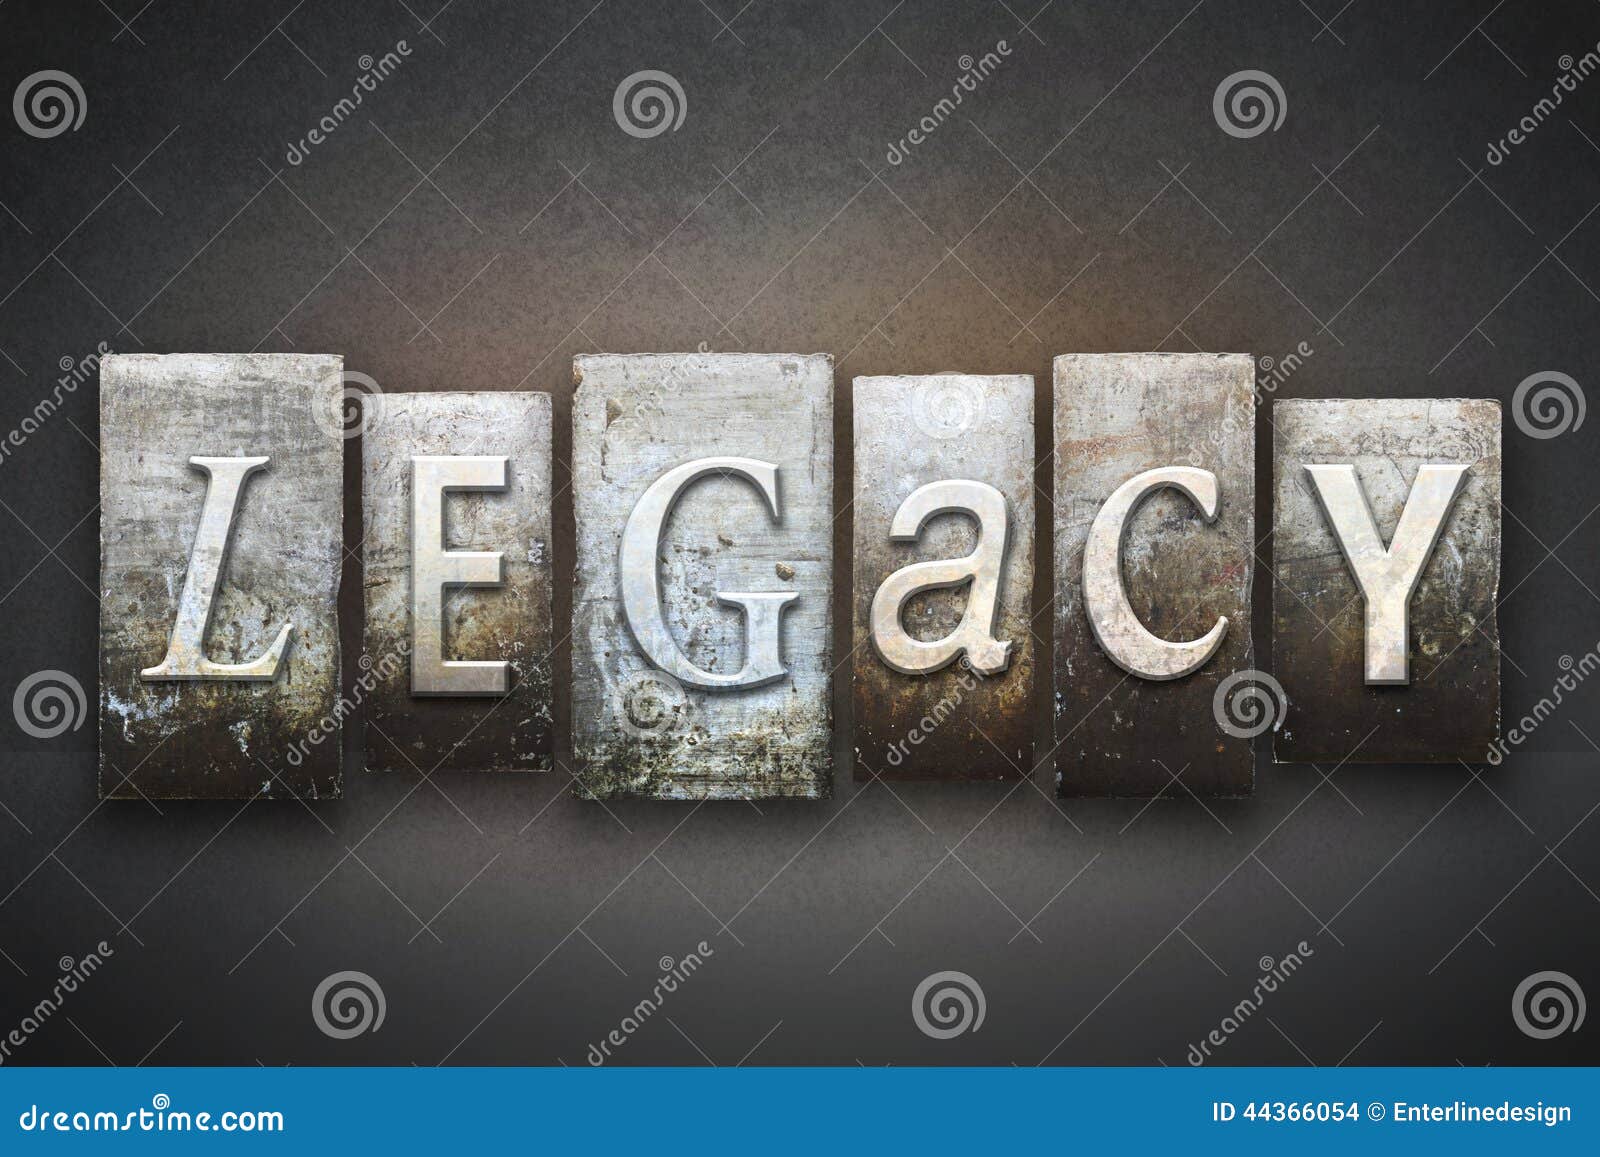 legacy letterpress